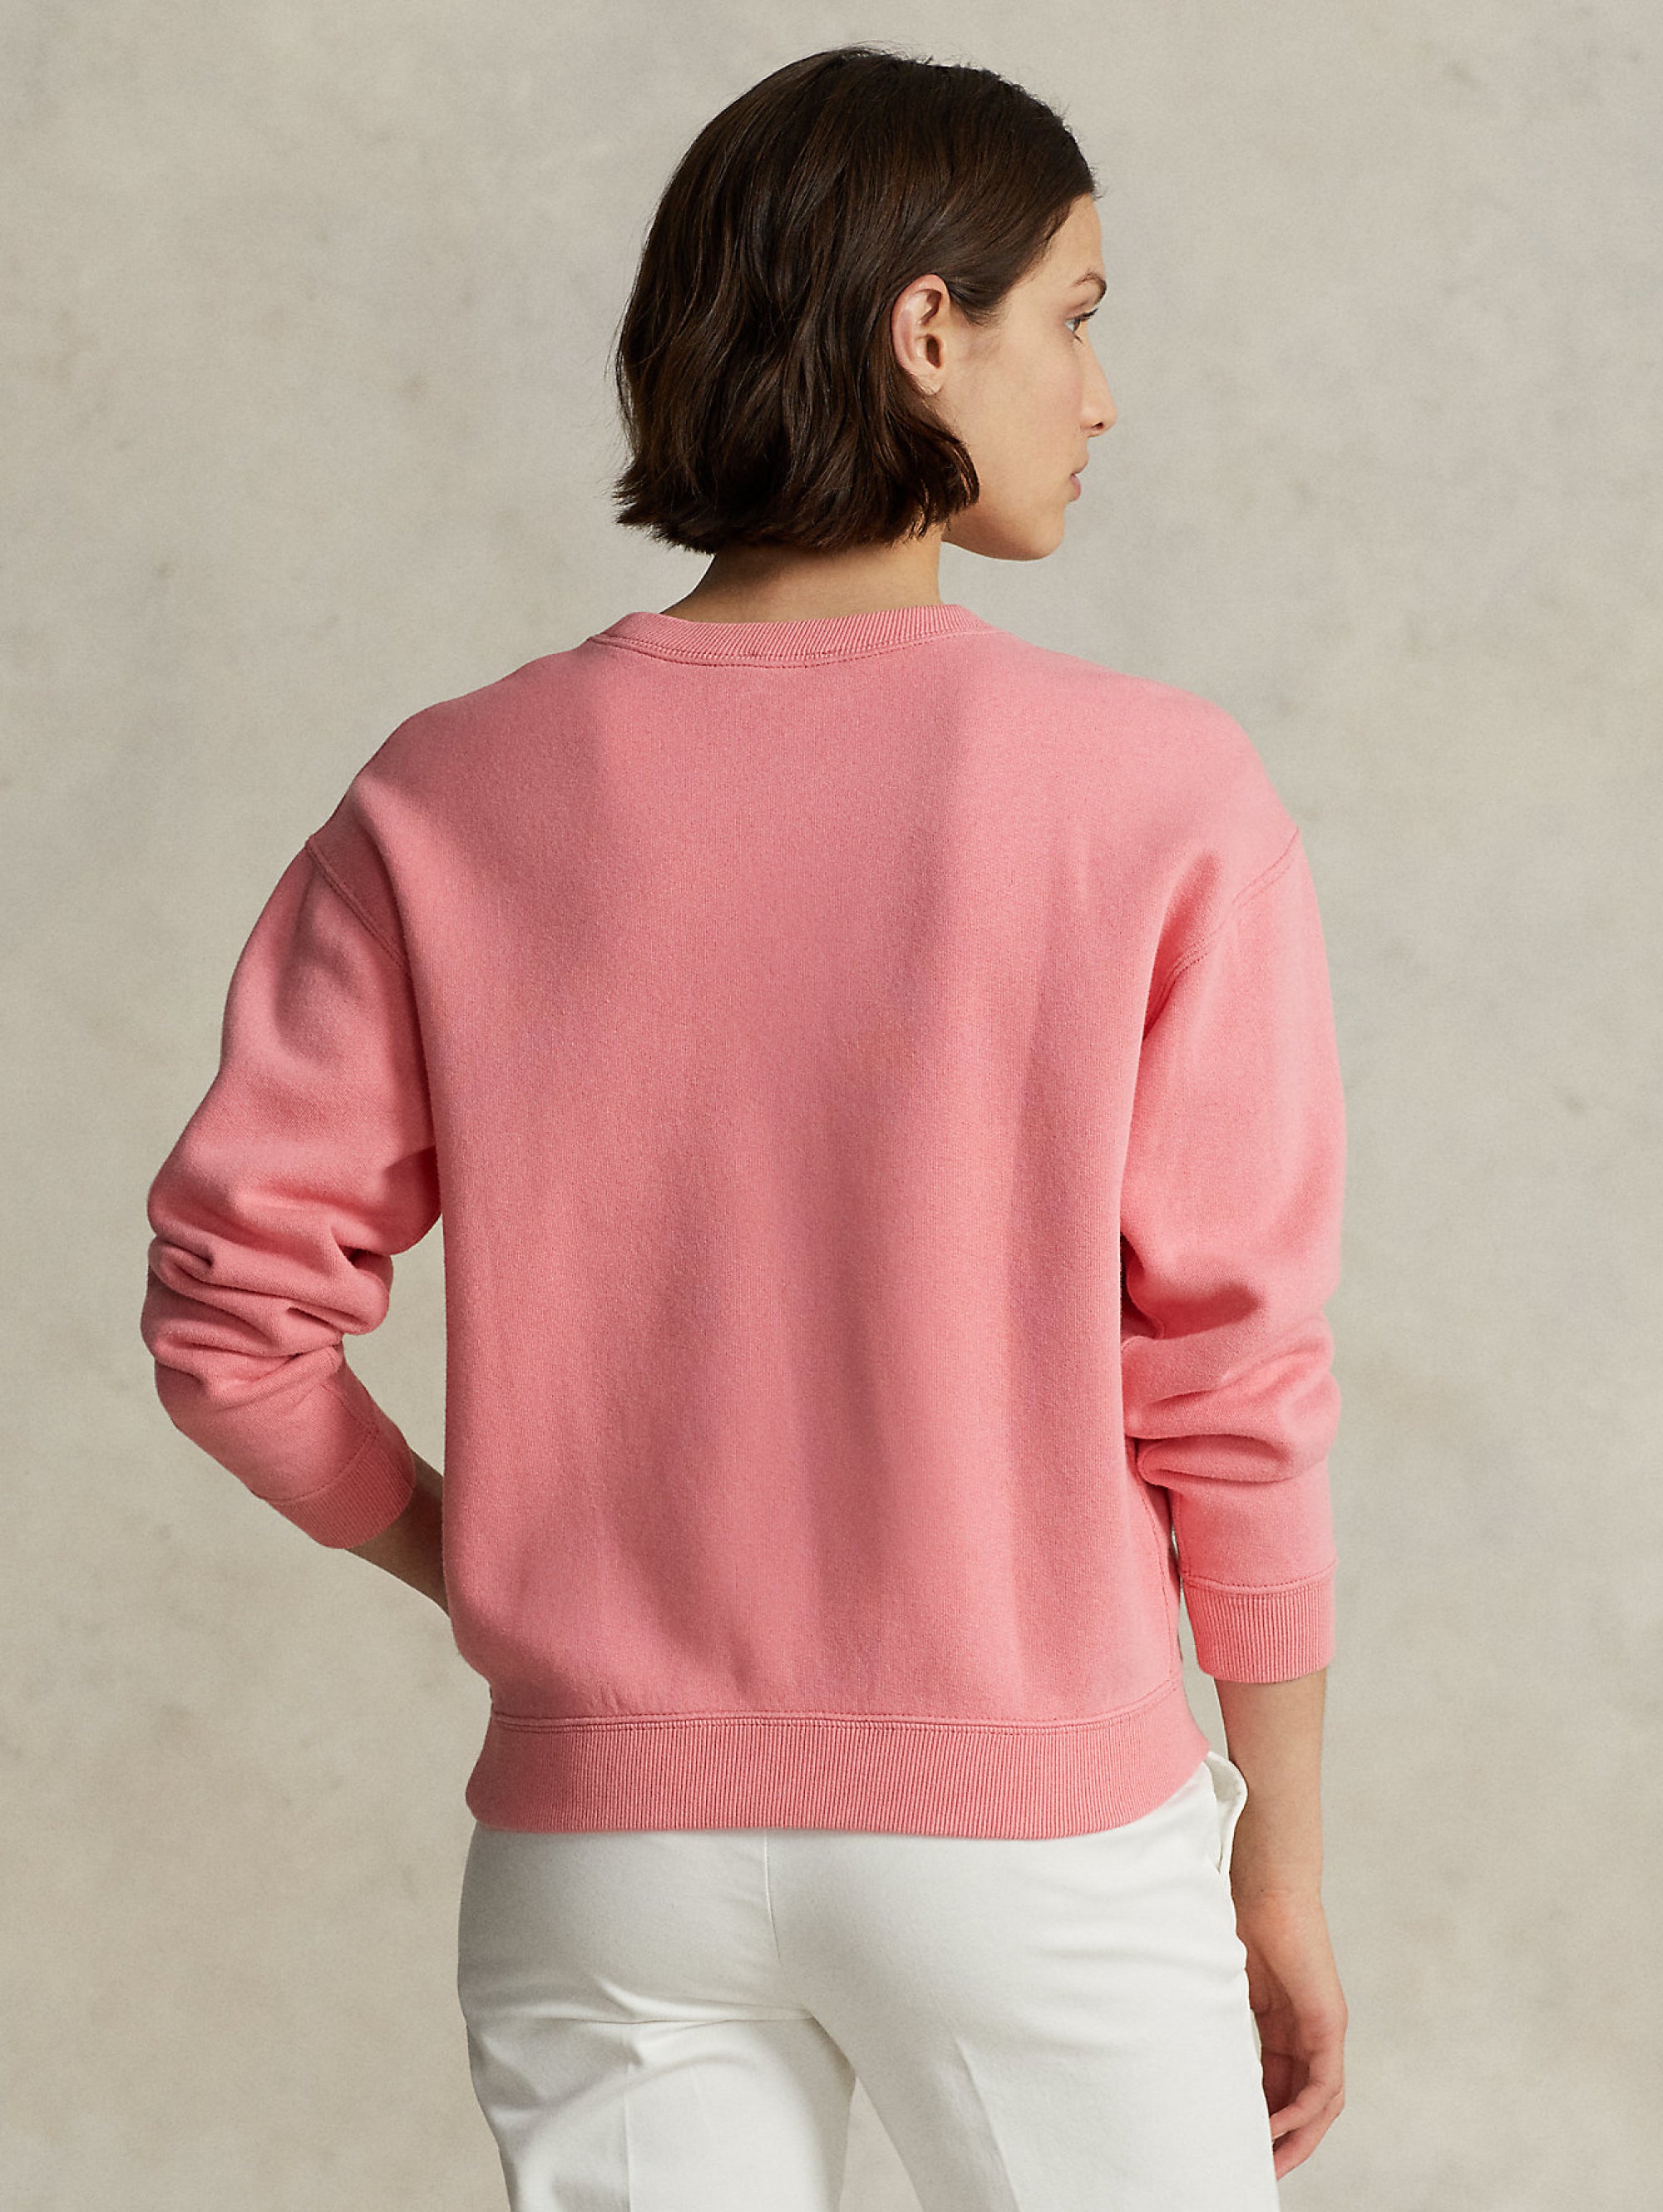 Süßes rosa Rundhals-Sweatshirt